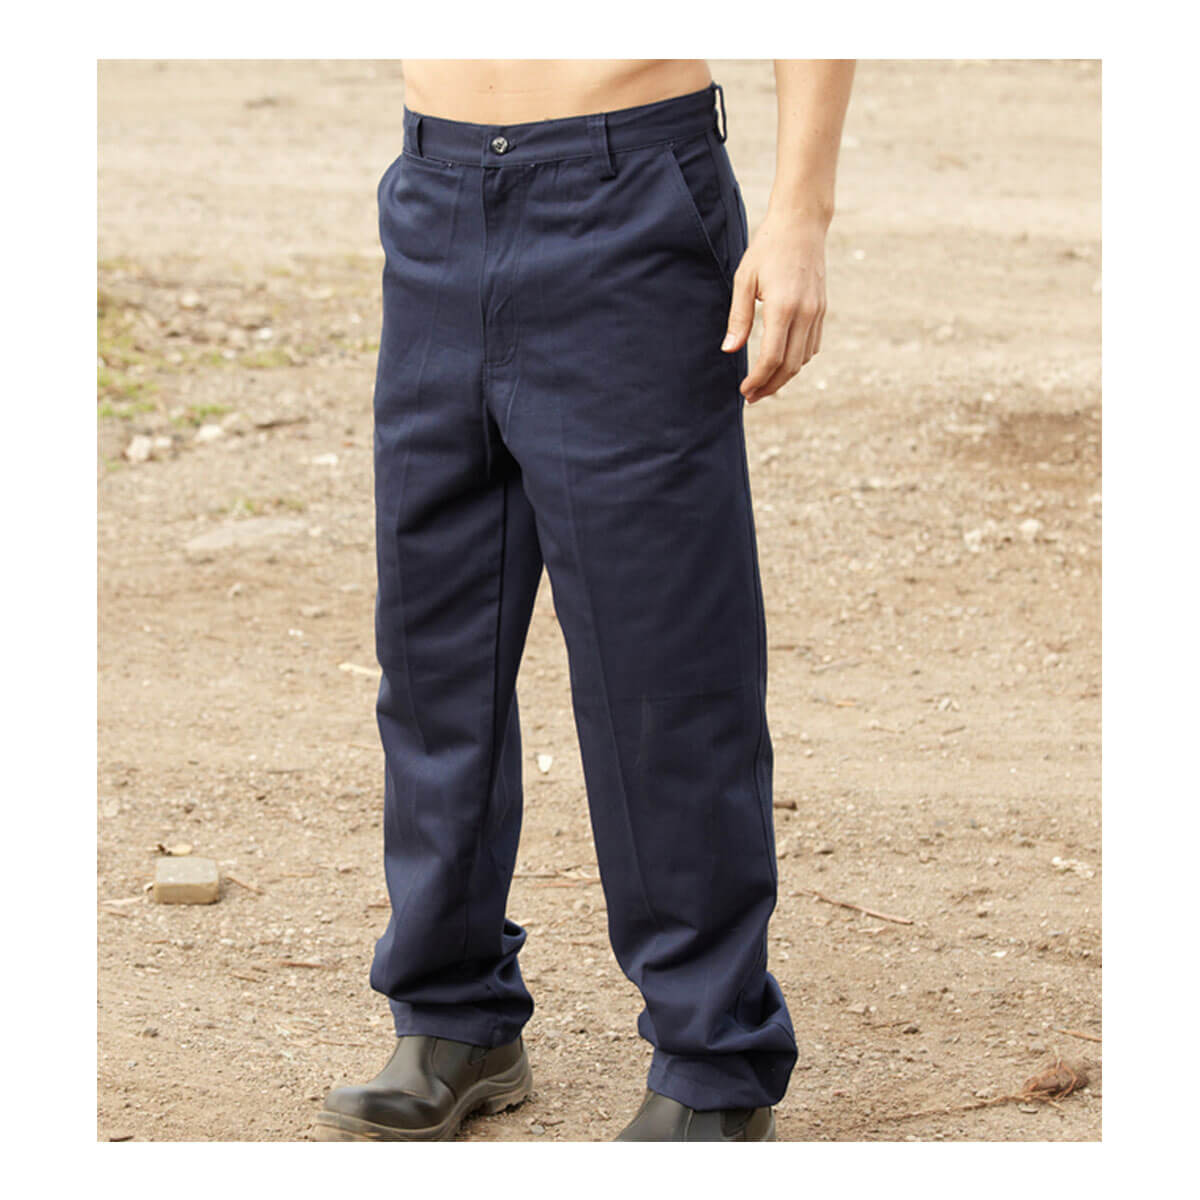 Cotton Drill Work Pants | Unisex Adults | Cotton Work Pants